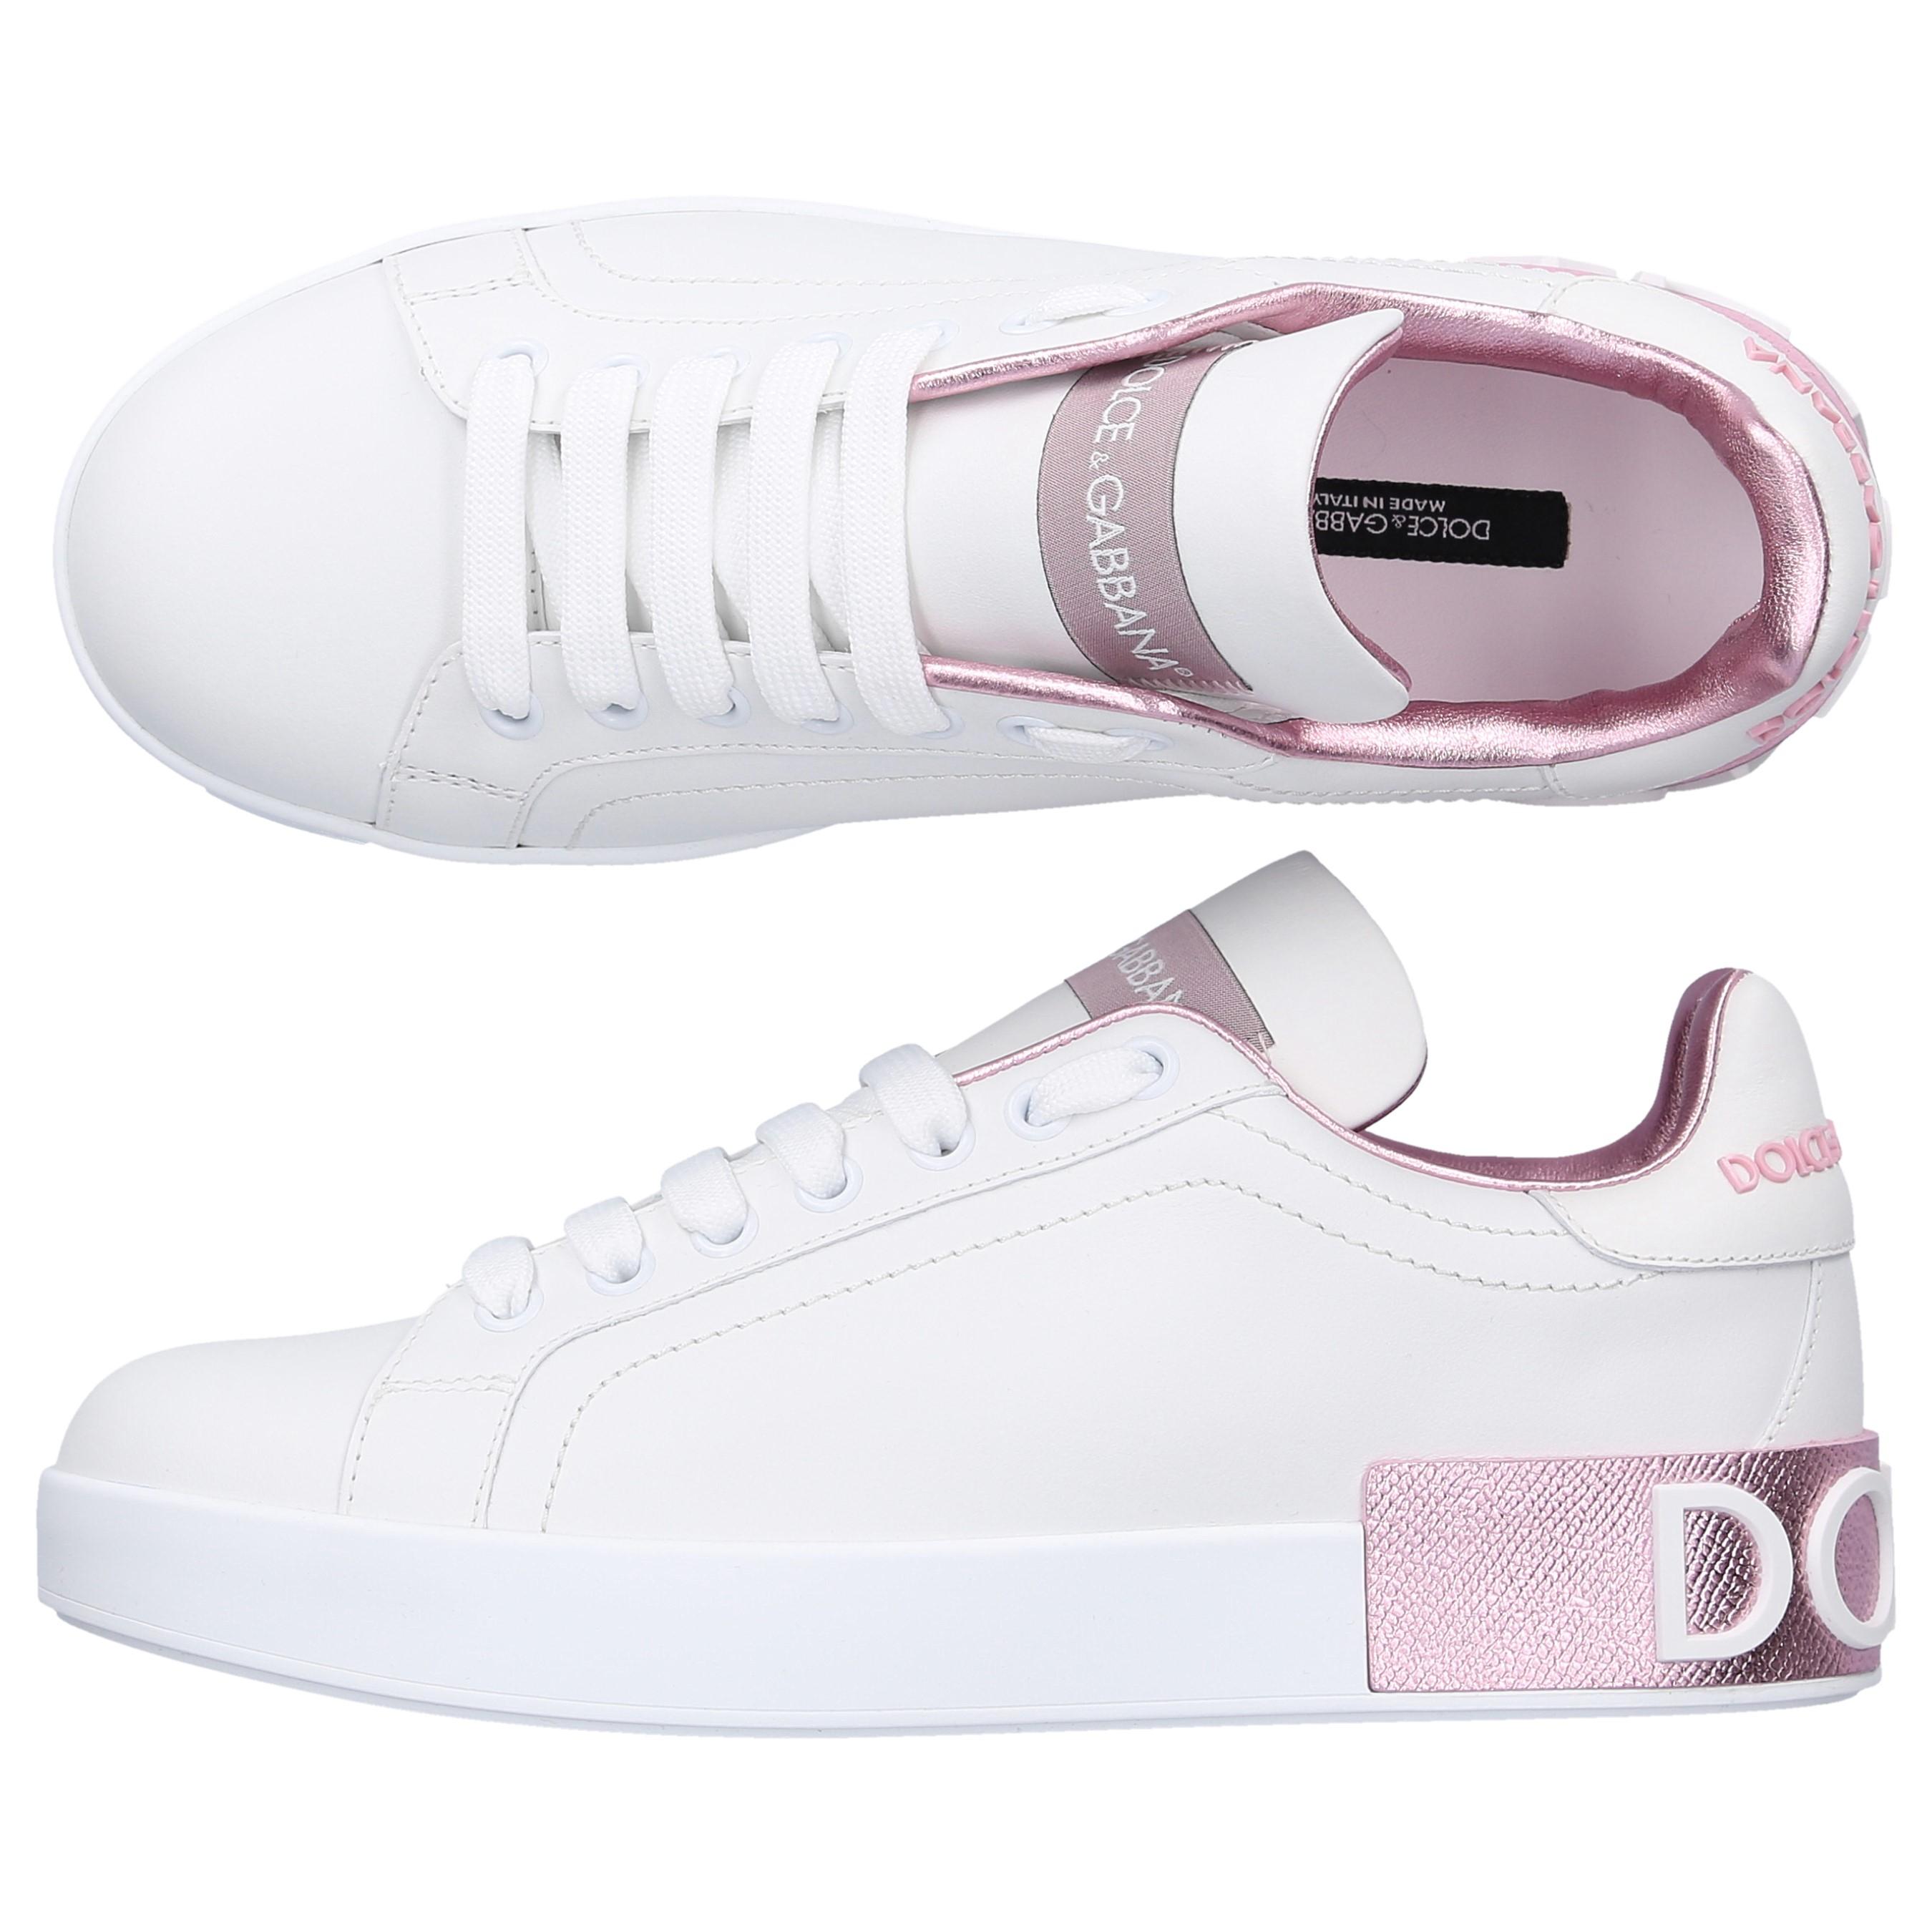 Dolce & Gabbana Dolcegabbana Portofino Sneakers in White/Pink (Pink) - Lyst